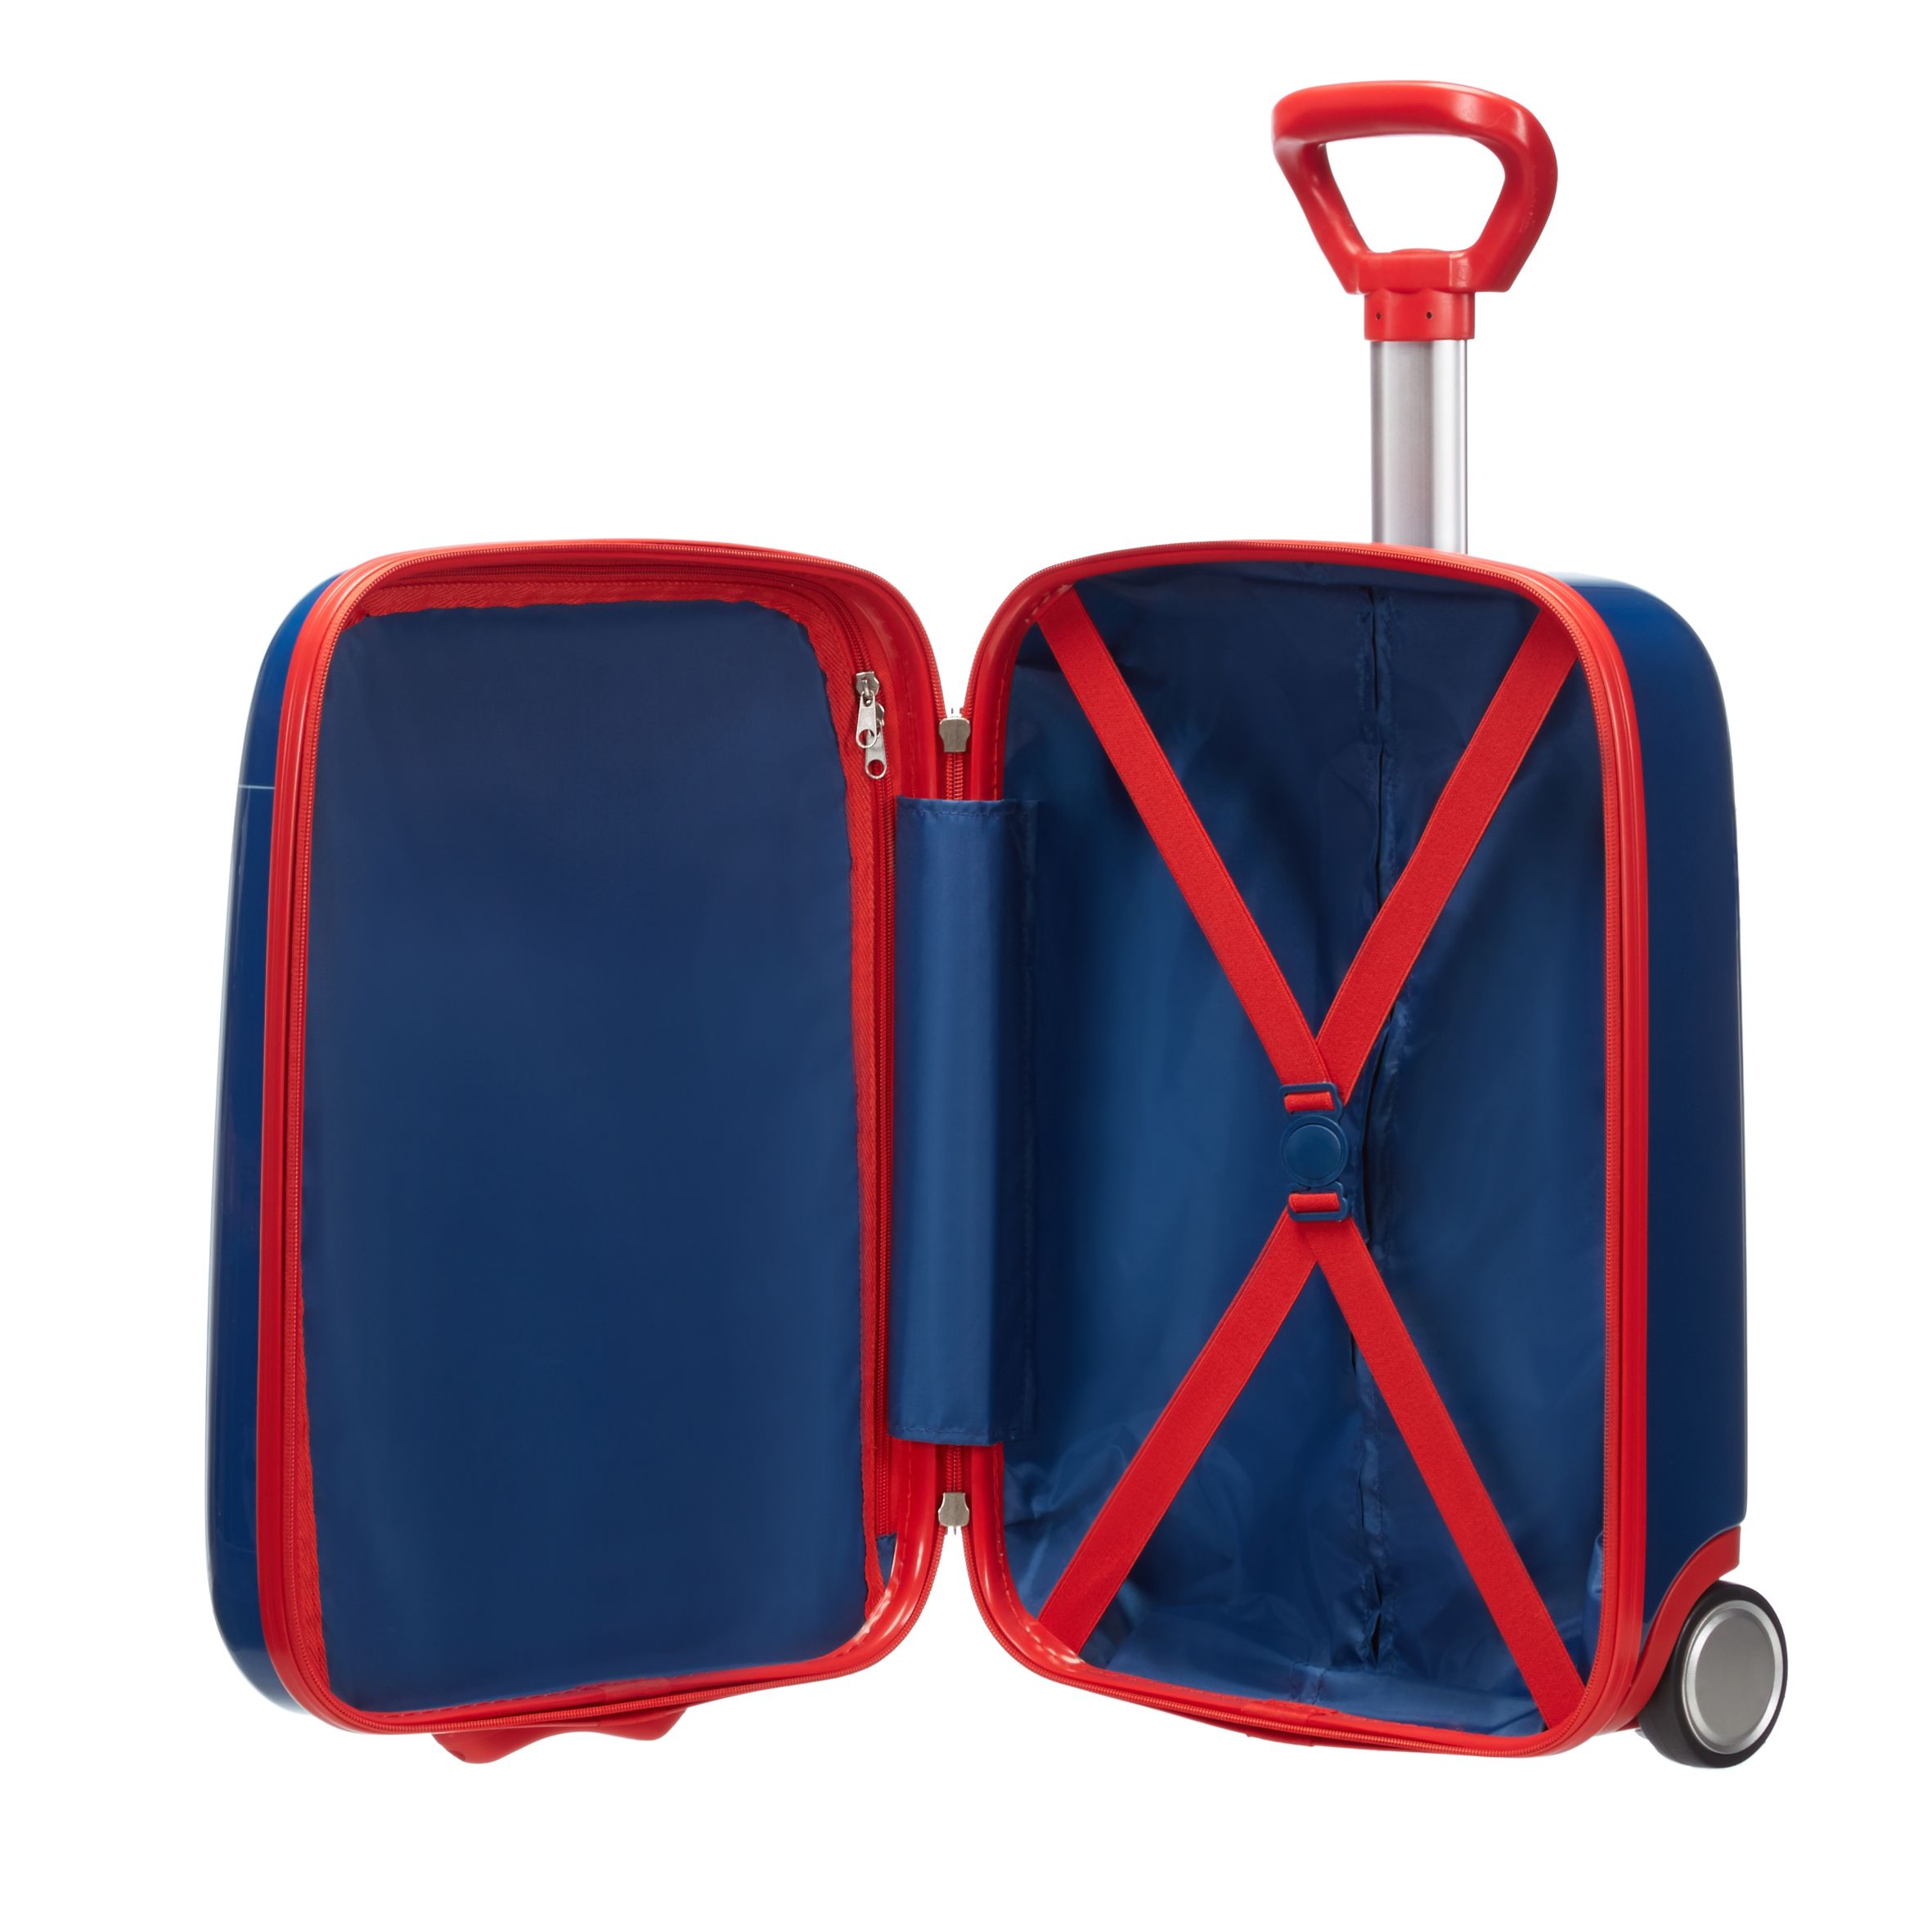 Samsonite Marvel Wonder 2-Wheel 52cm Spiderman Power Suitcase, Blue/Red